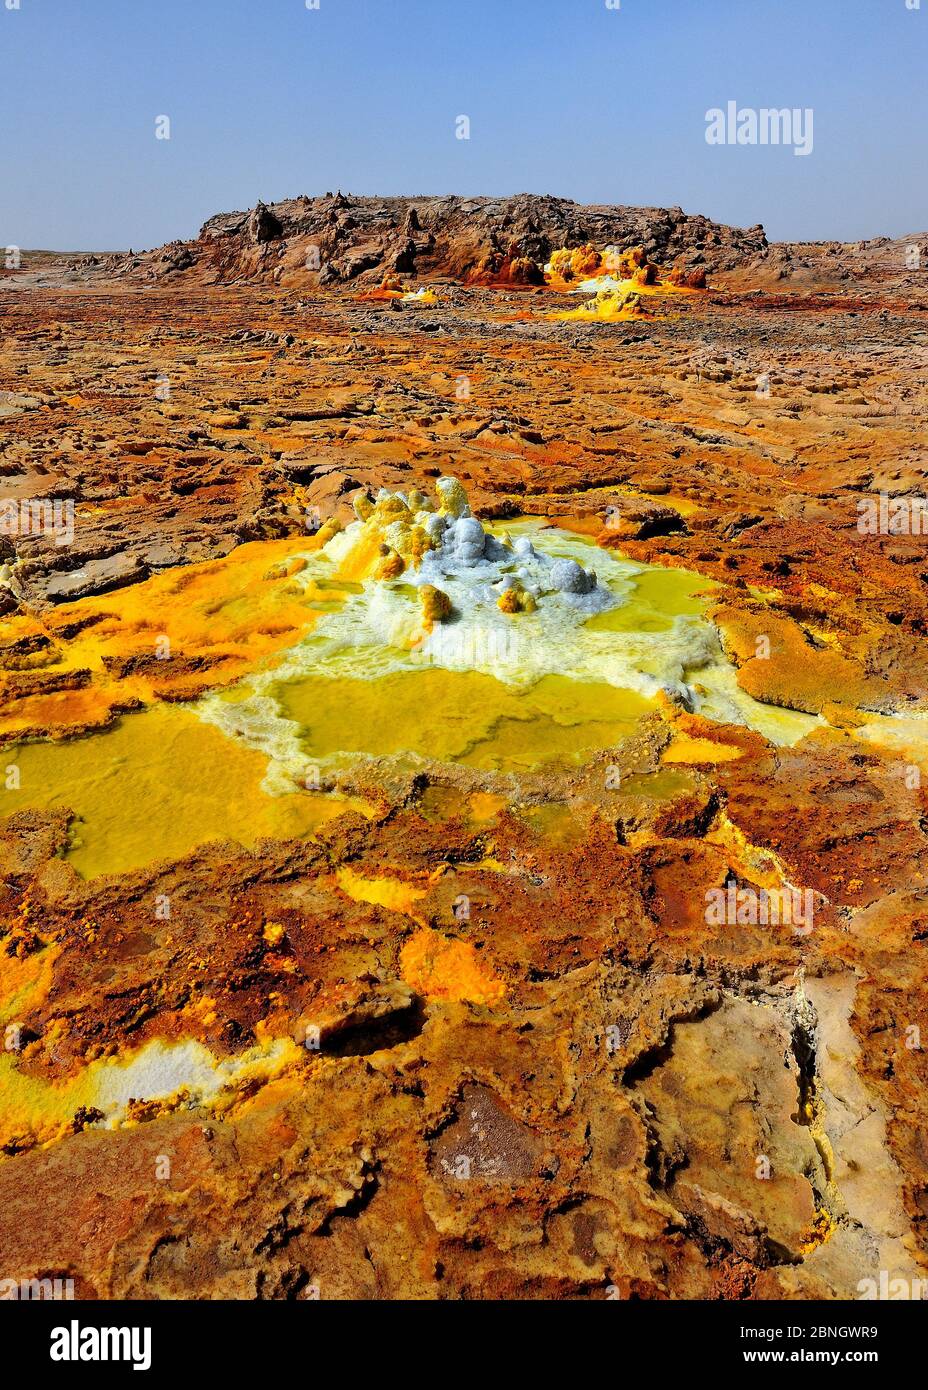 Landscape with salts and sulfur deposits, Dallol, Danakil Depression, North Ethiopia. February 2009. Stock Photo